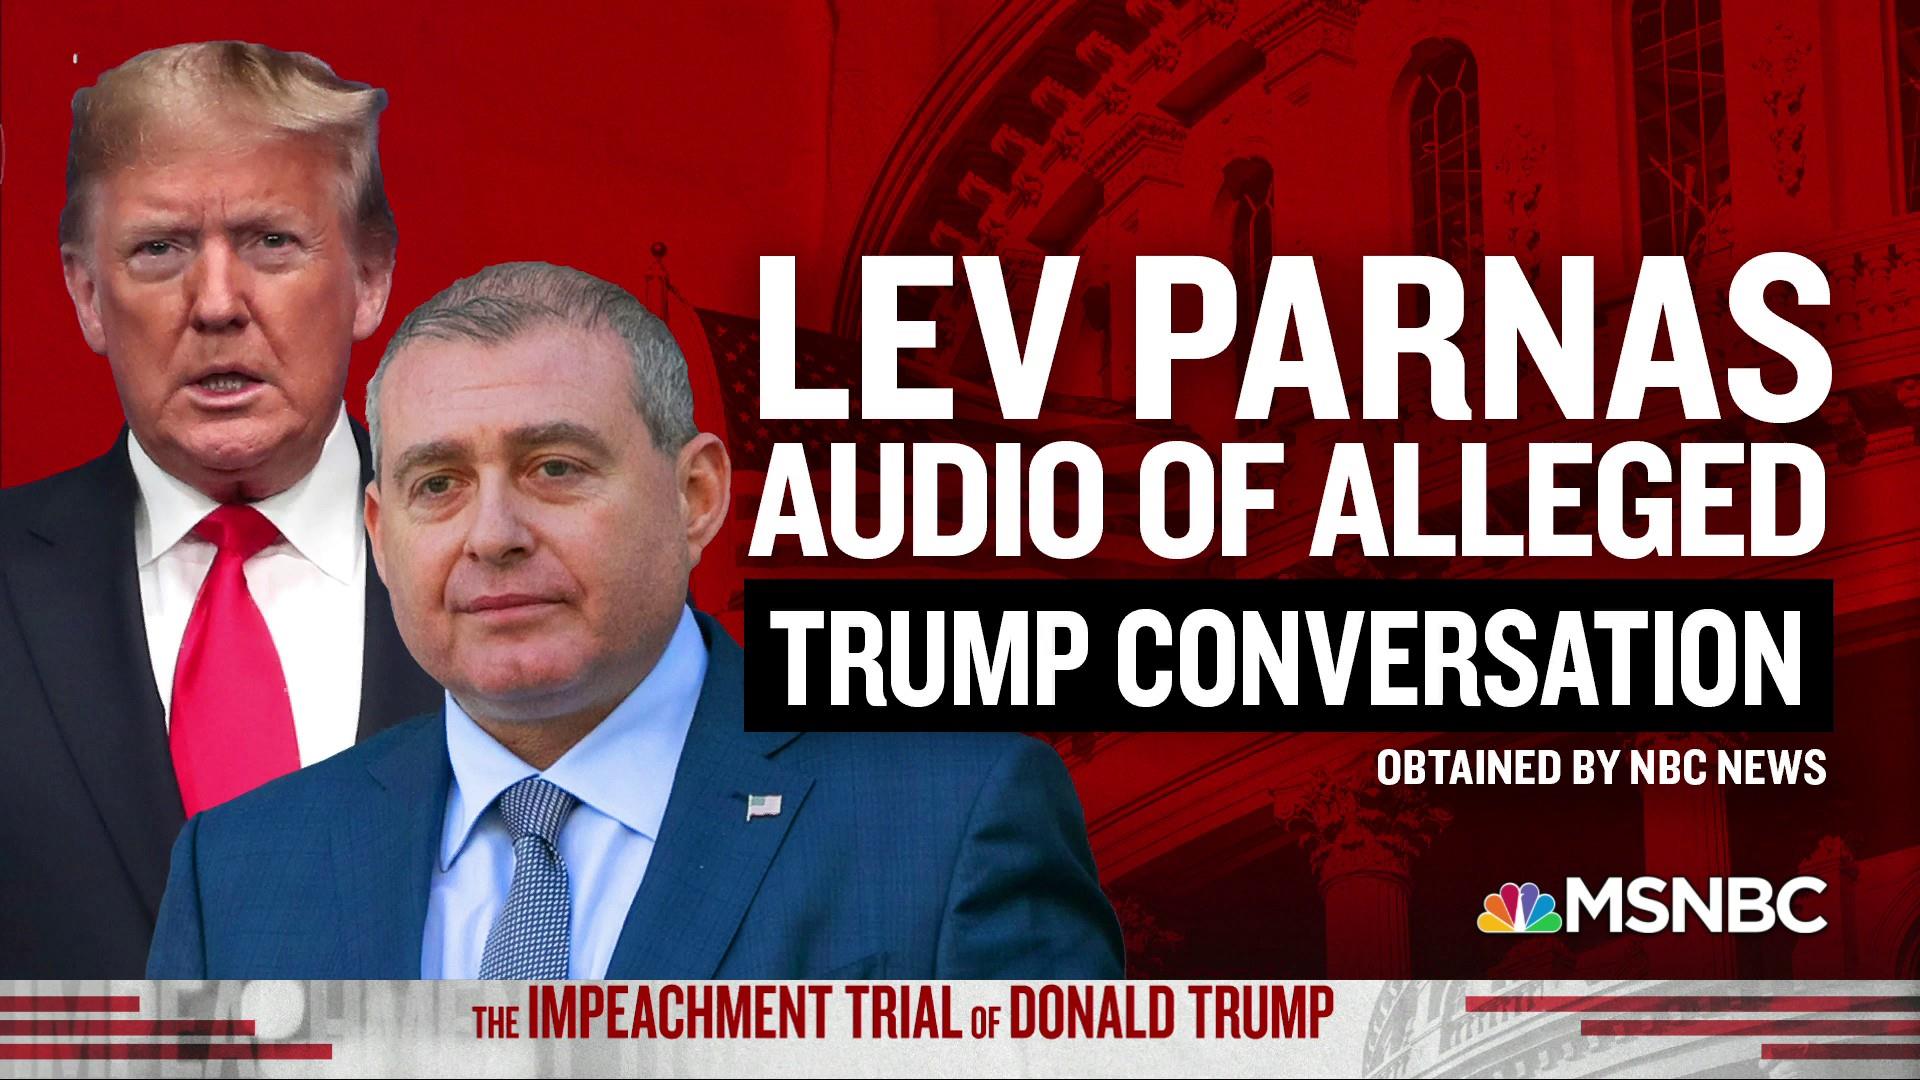 Nbc News Obtains Audio Appearing To Show Trump Ordering Firing Of U S Ambassador